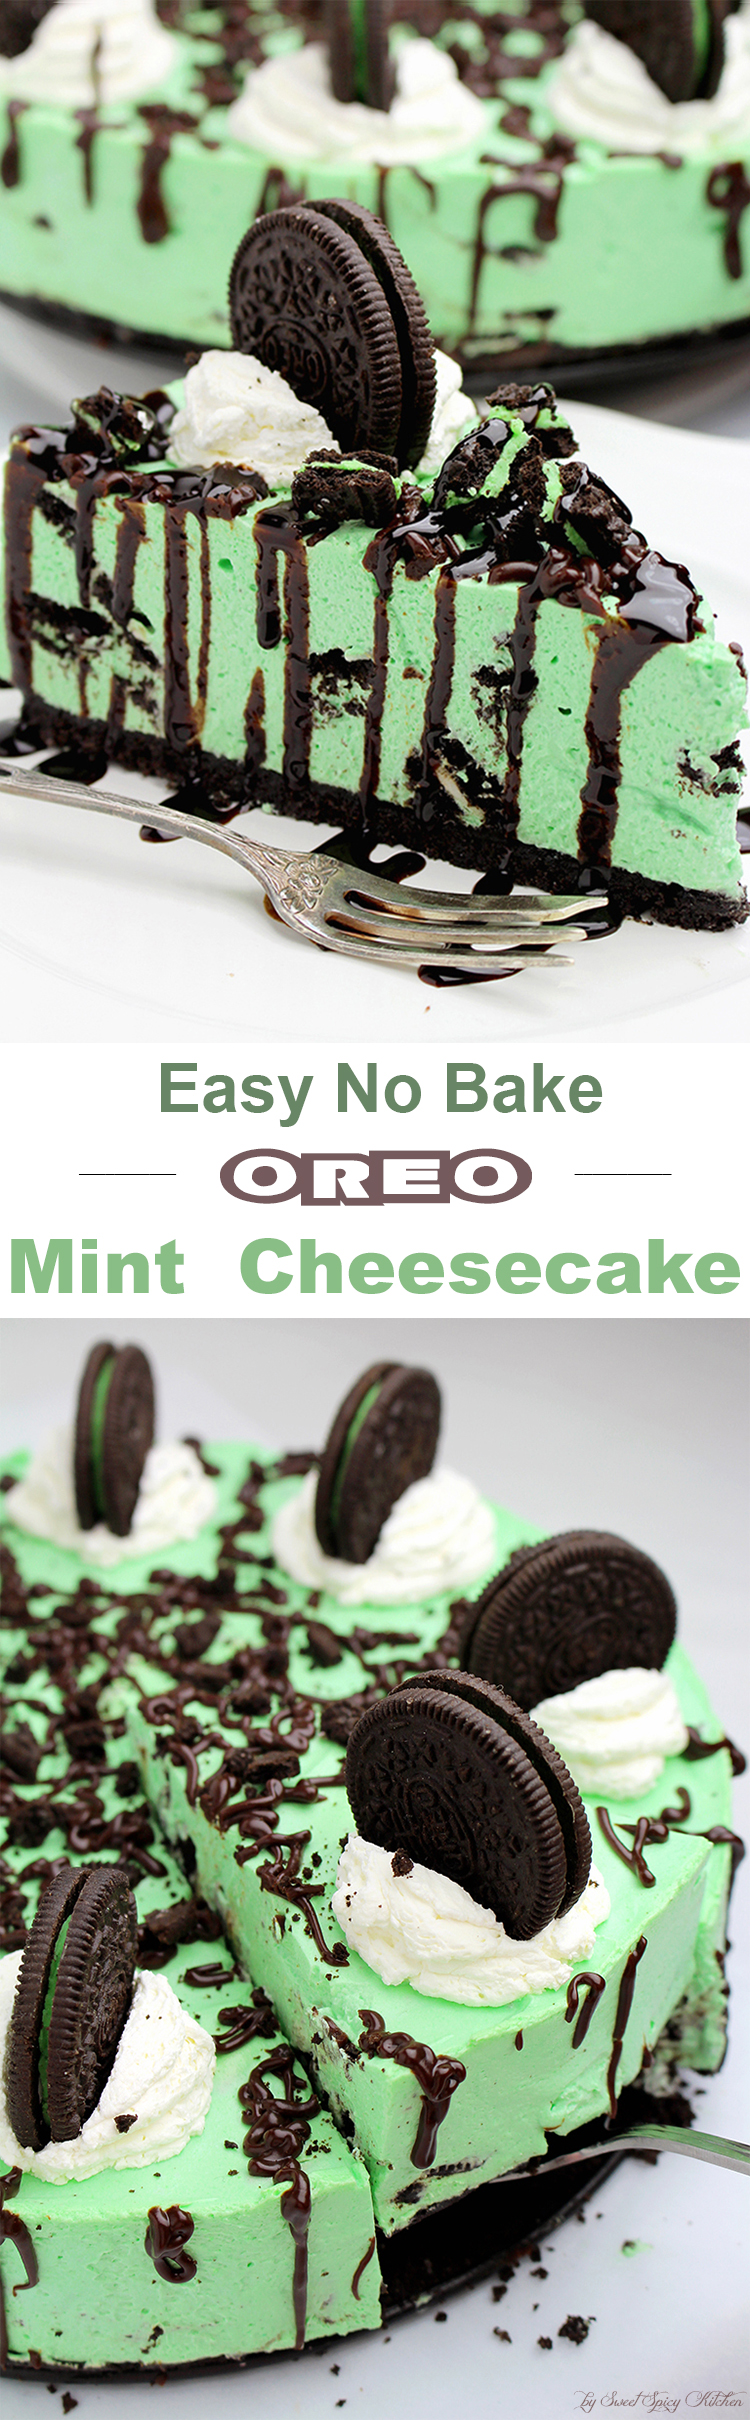 Untitled-155 Easy No Bake Oreo Mint Cheesecake